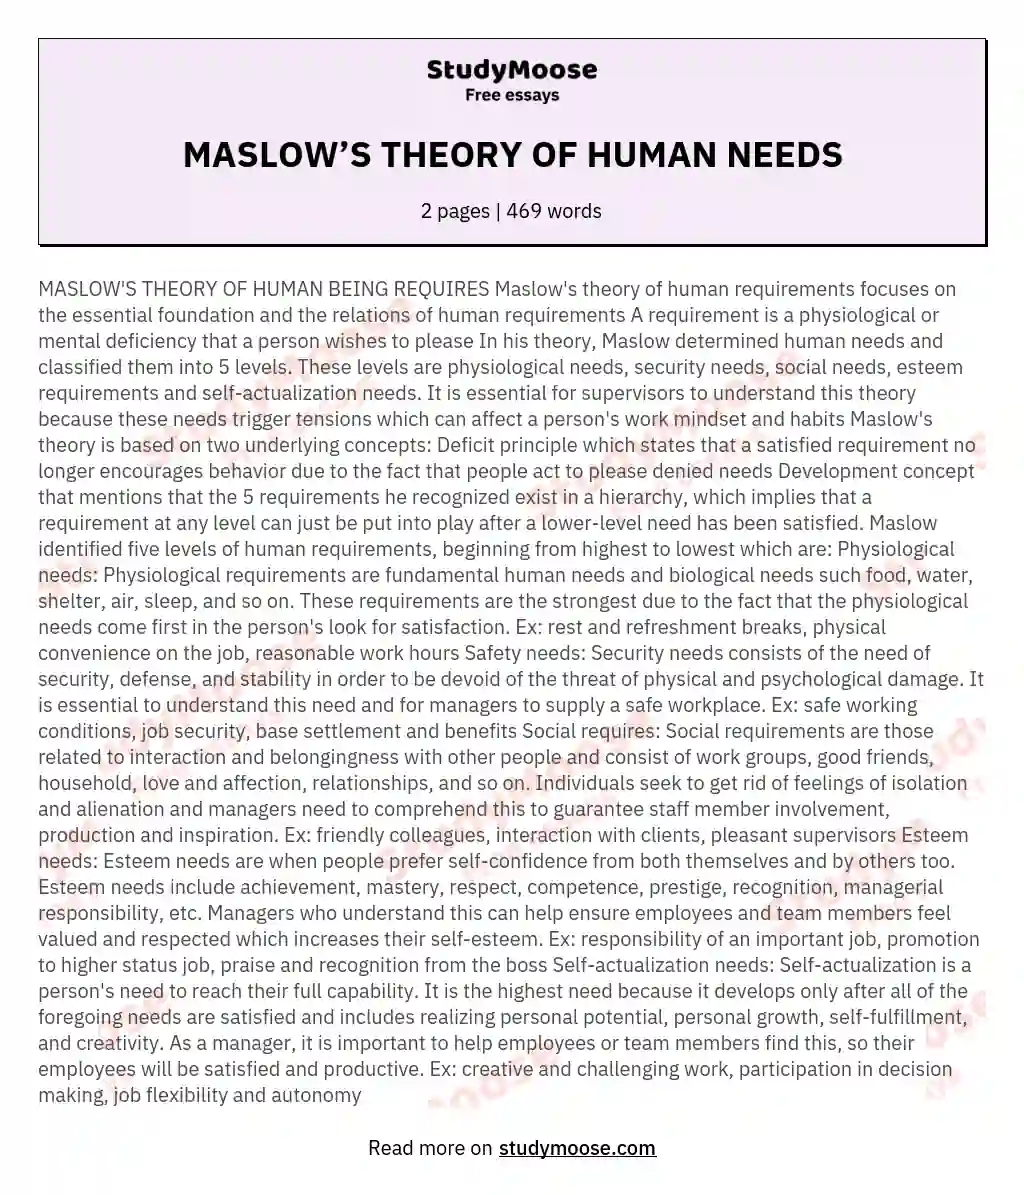 MASLOW’S THEORY OF HUMAN NEEDS essay